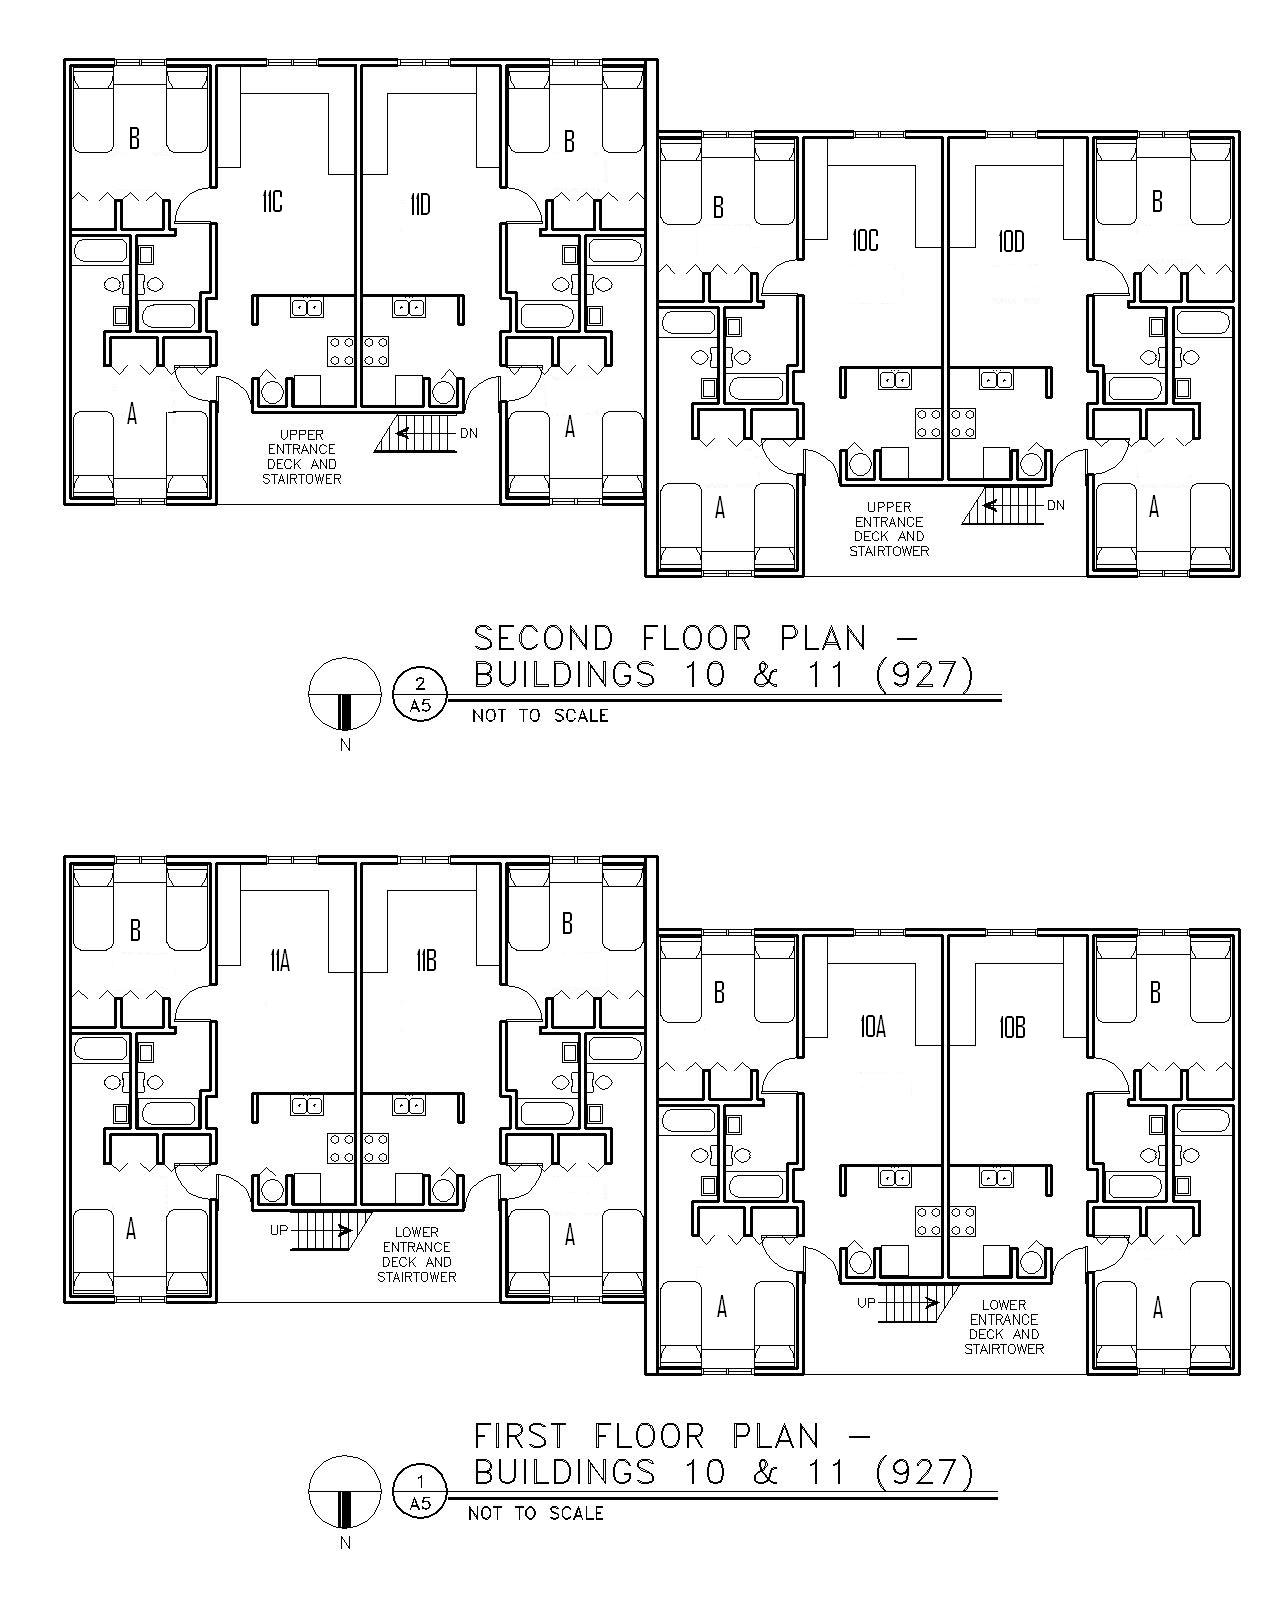 Floor Plan for Buildings 10 & 11